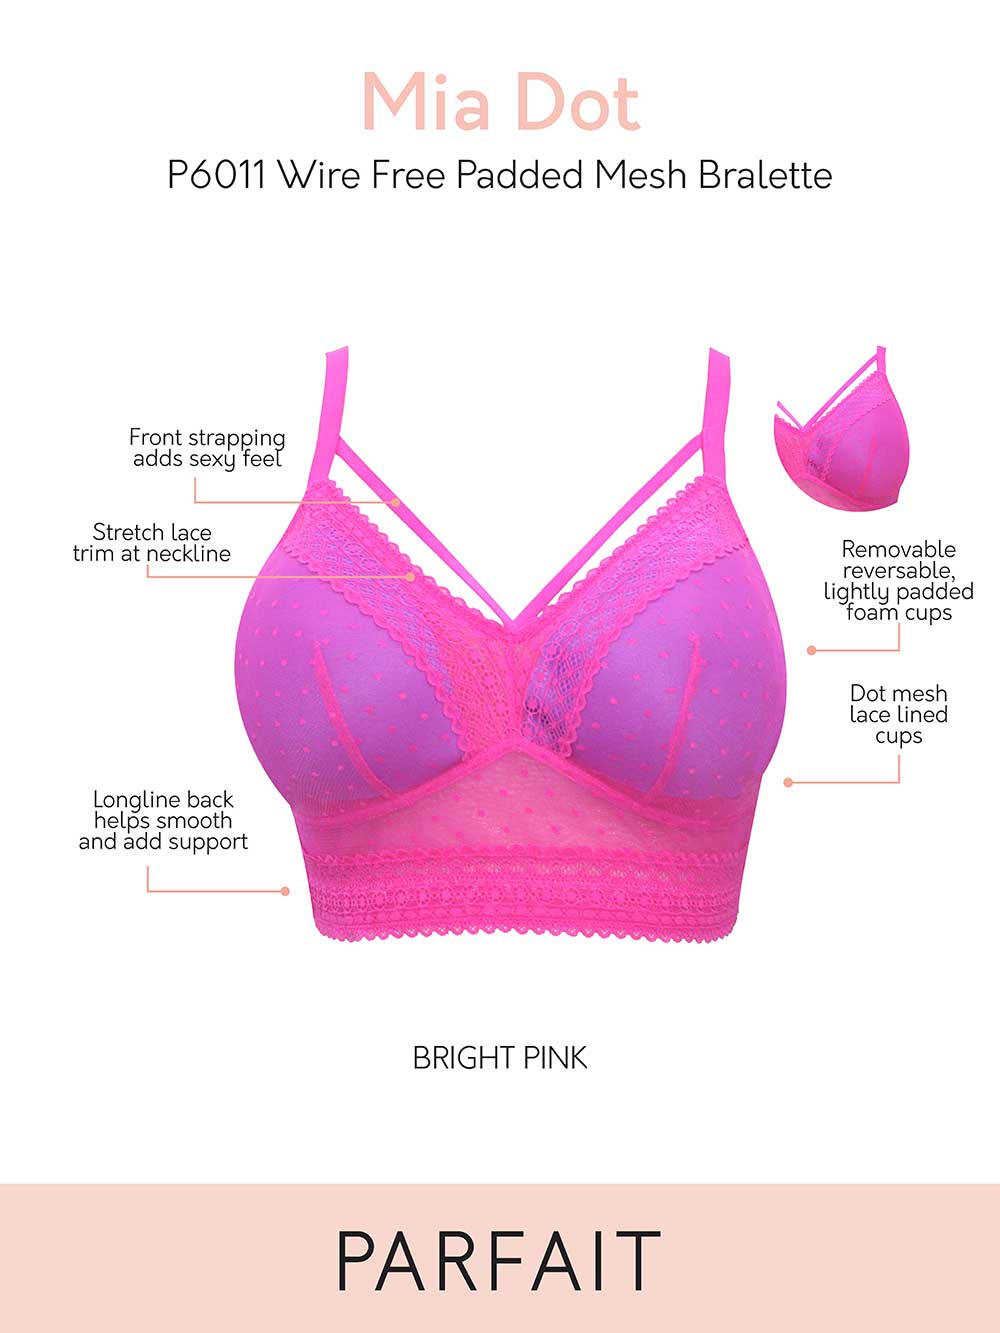 Parfait Bras Parfait Mia Dot Wire-free Padded Mesh Bralette - Bright Pink